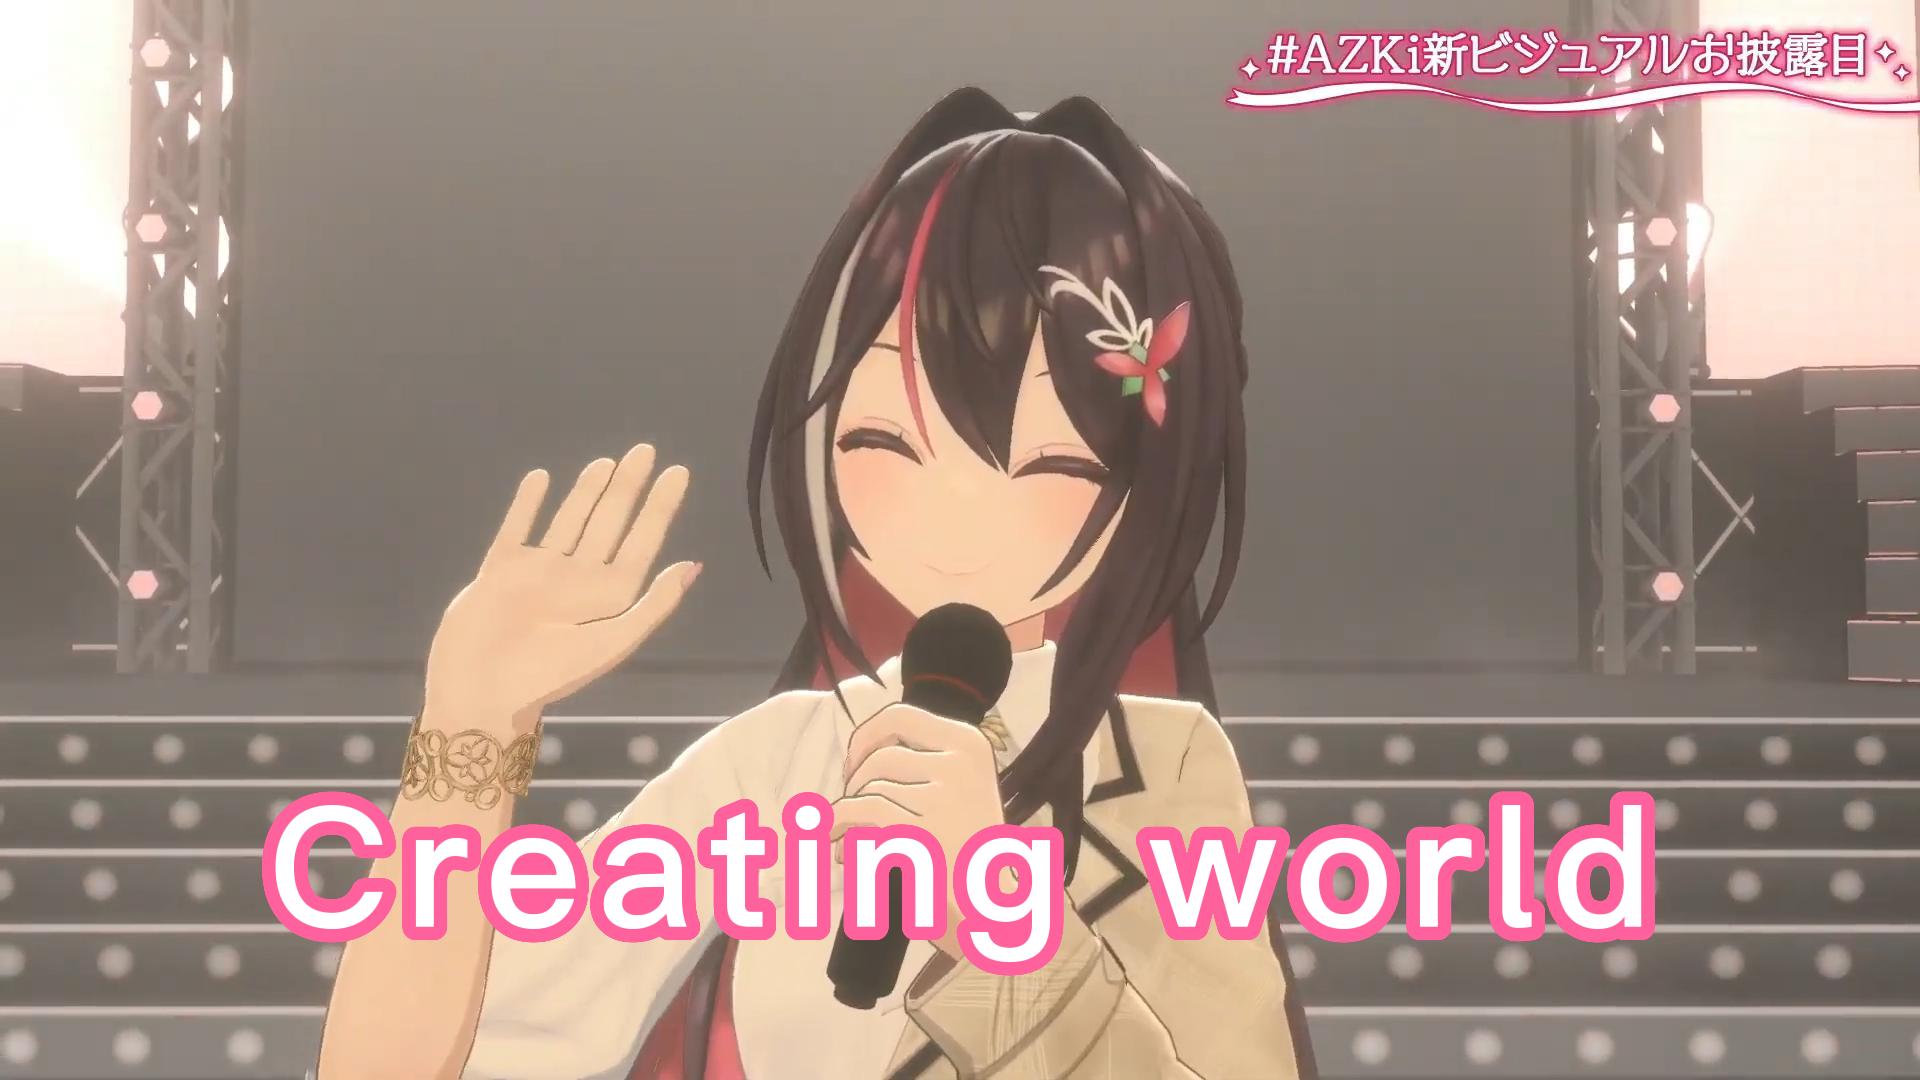 【AZKi四周年Live】Creating world